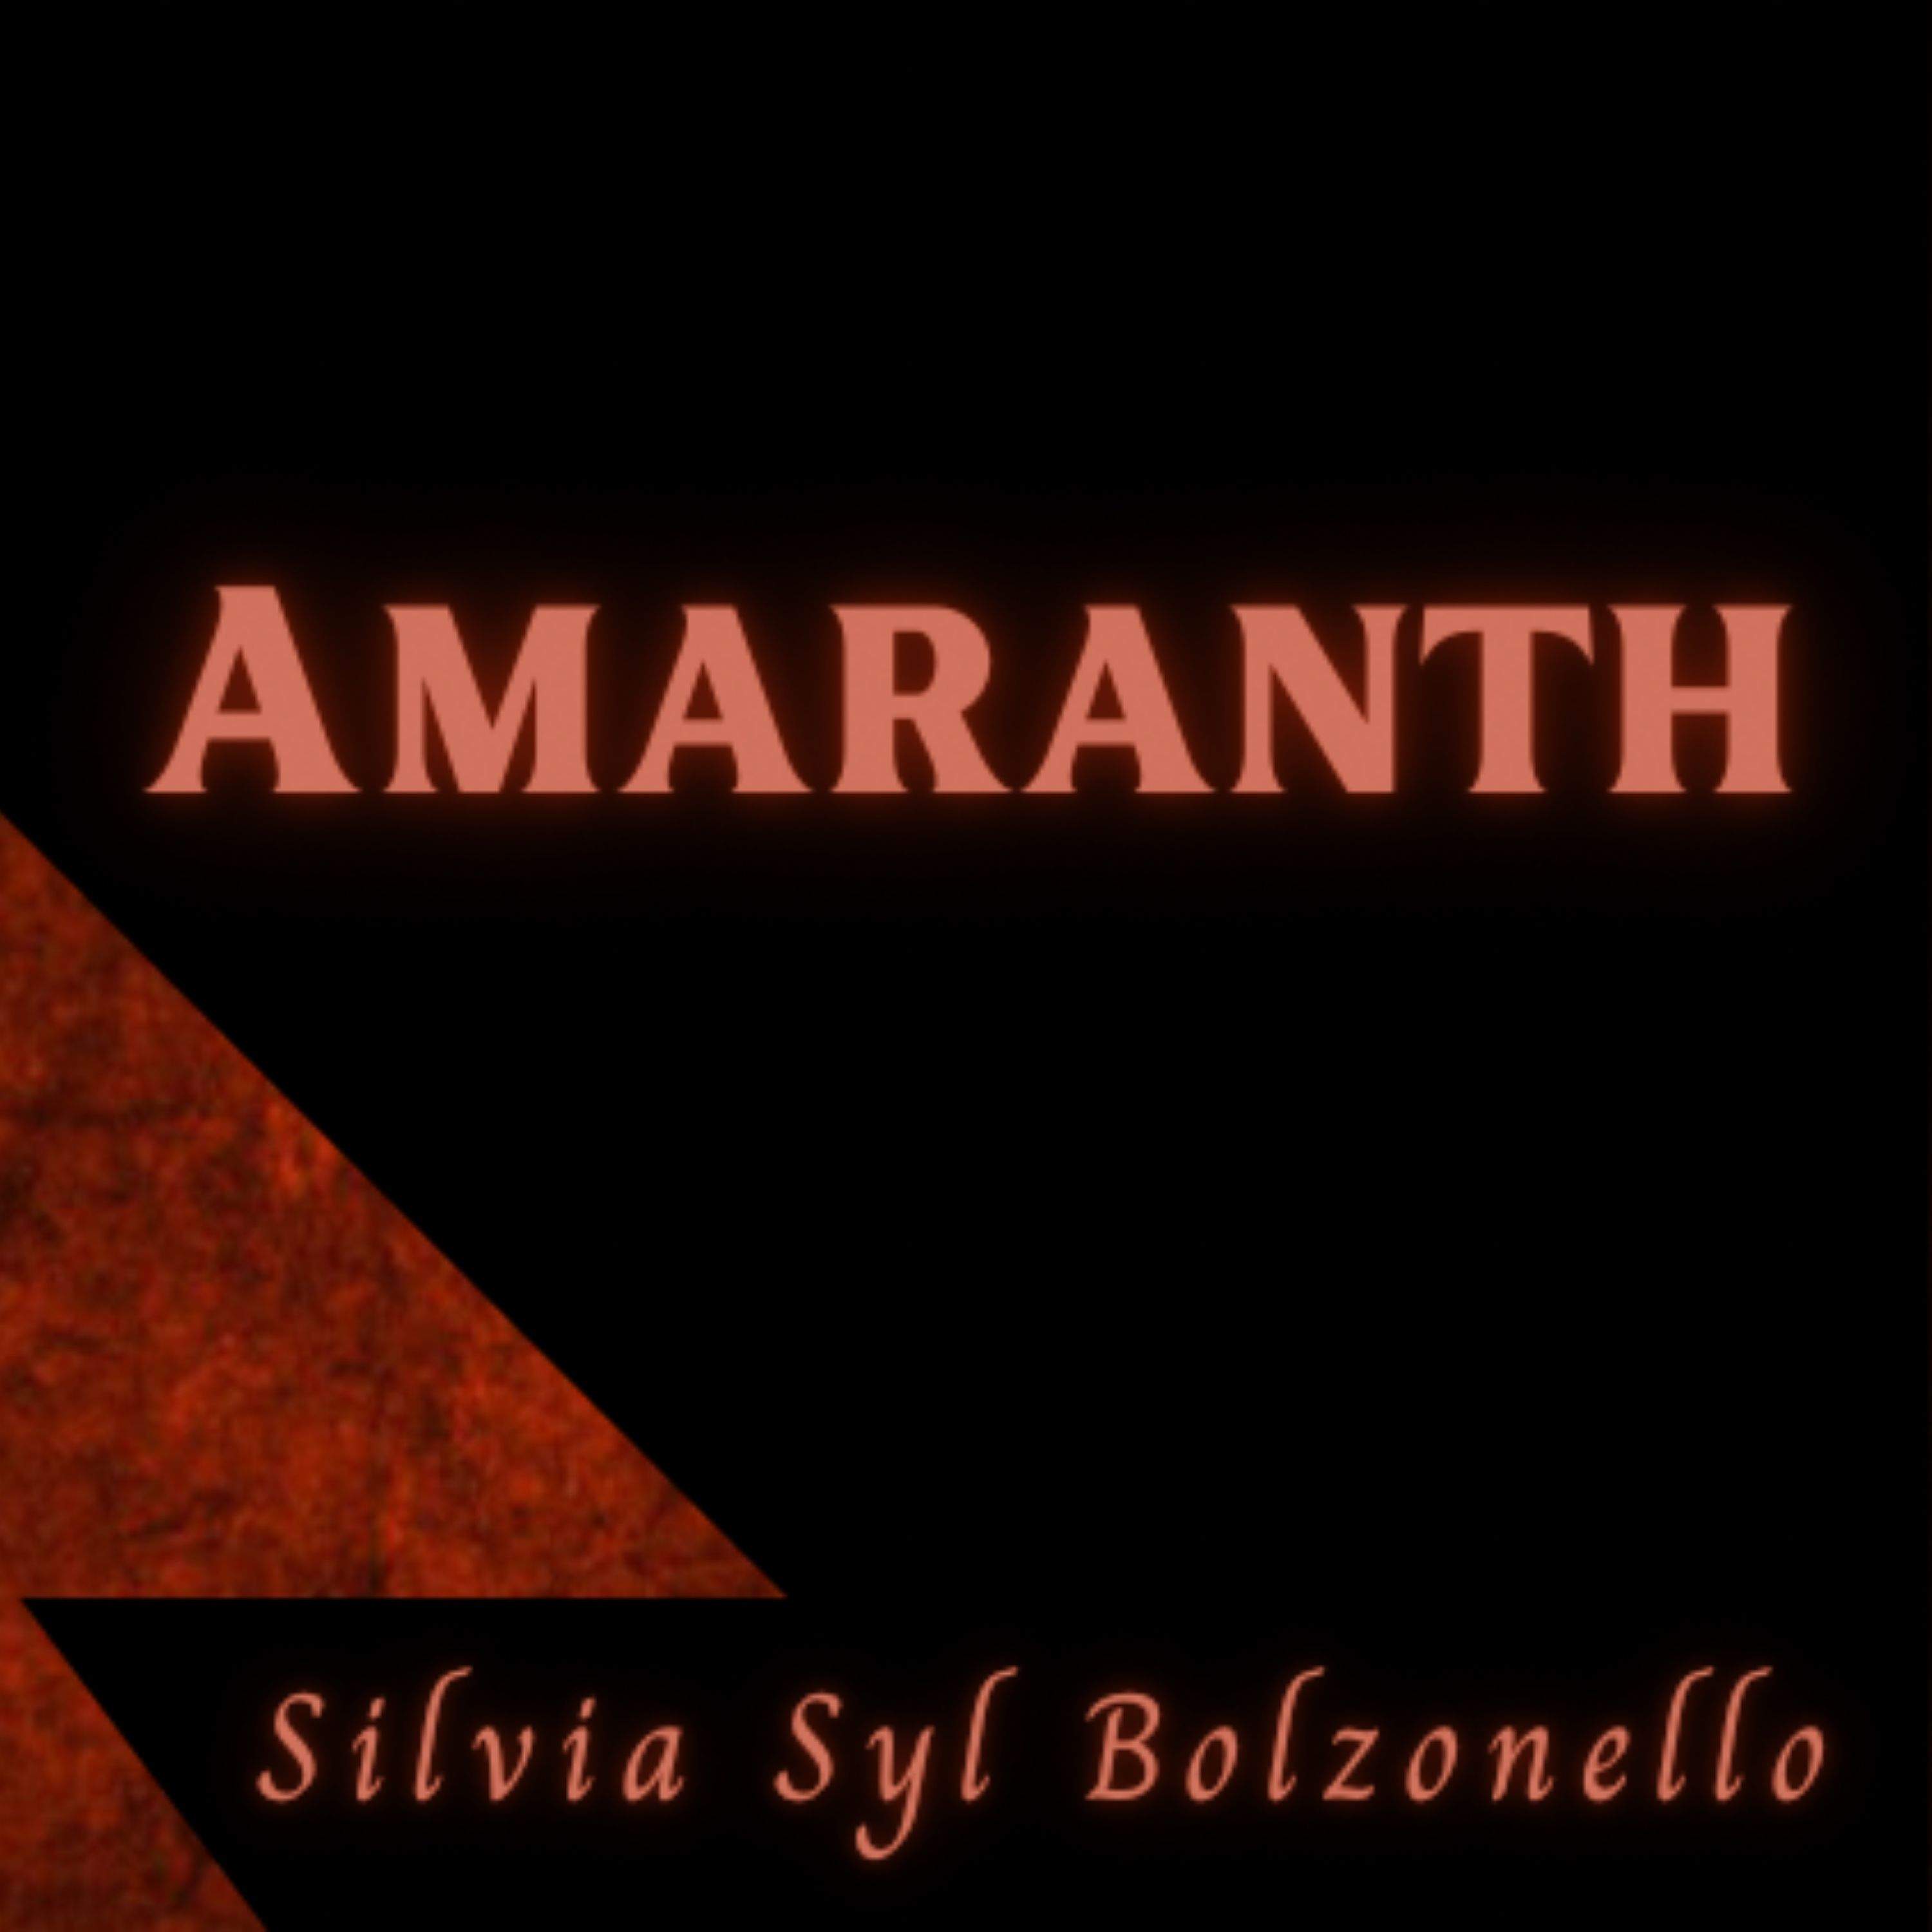 Silvia Syl Bolzanello interpreta Amaranth dei Nightwish!